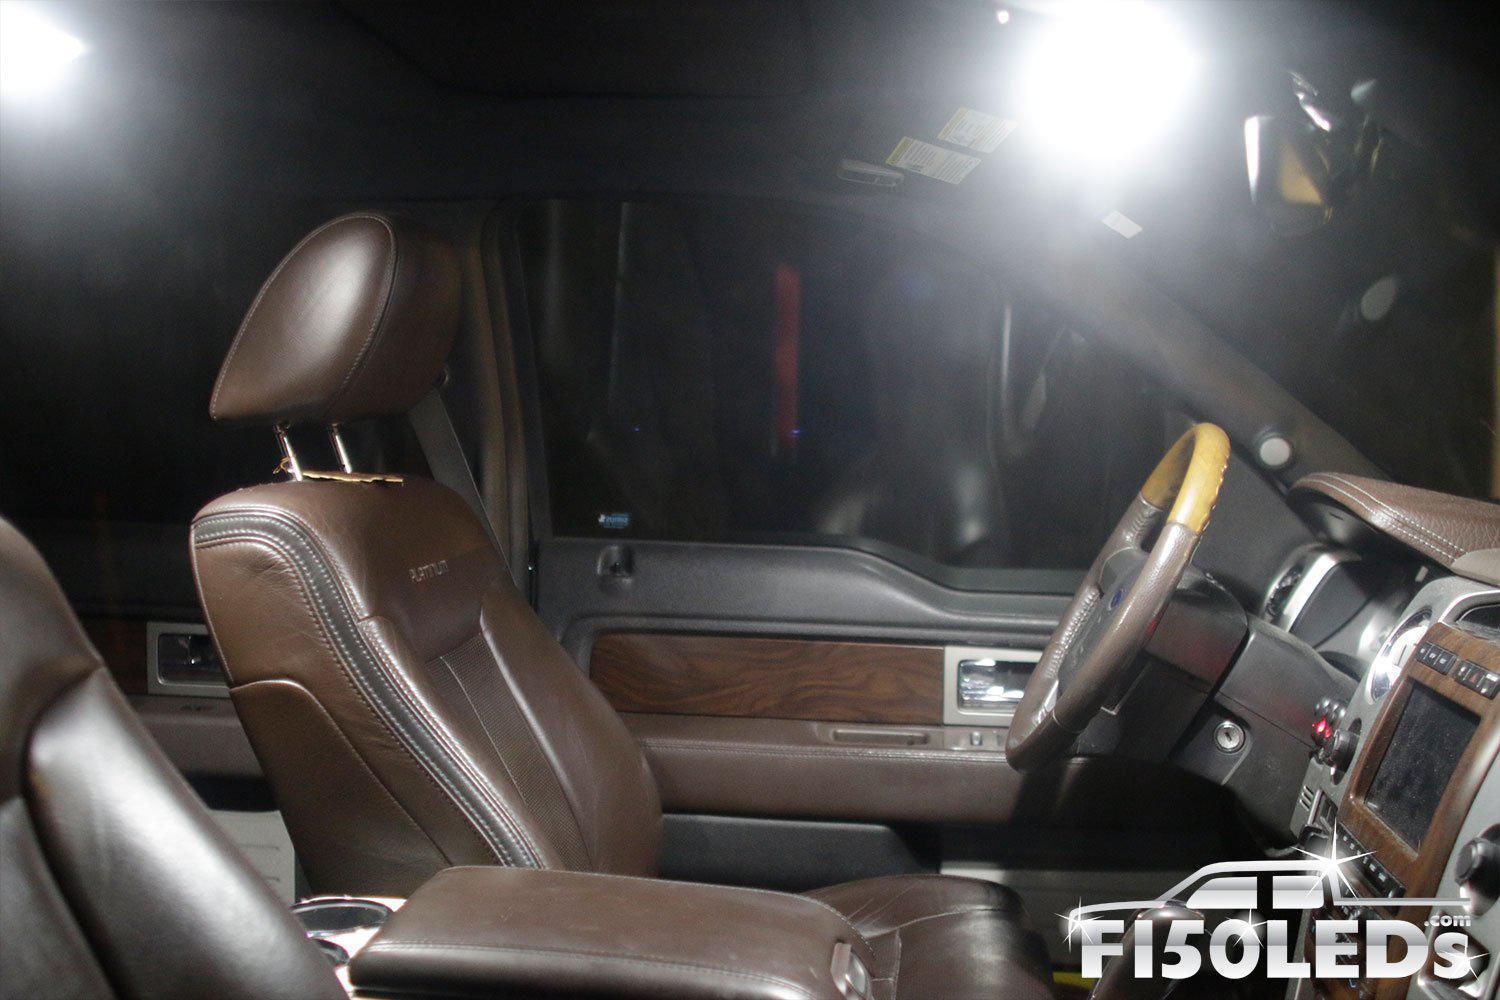 Exact Fit LED Interior Light Upgrade Kit for Ford F150 F-150 2009-2014